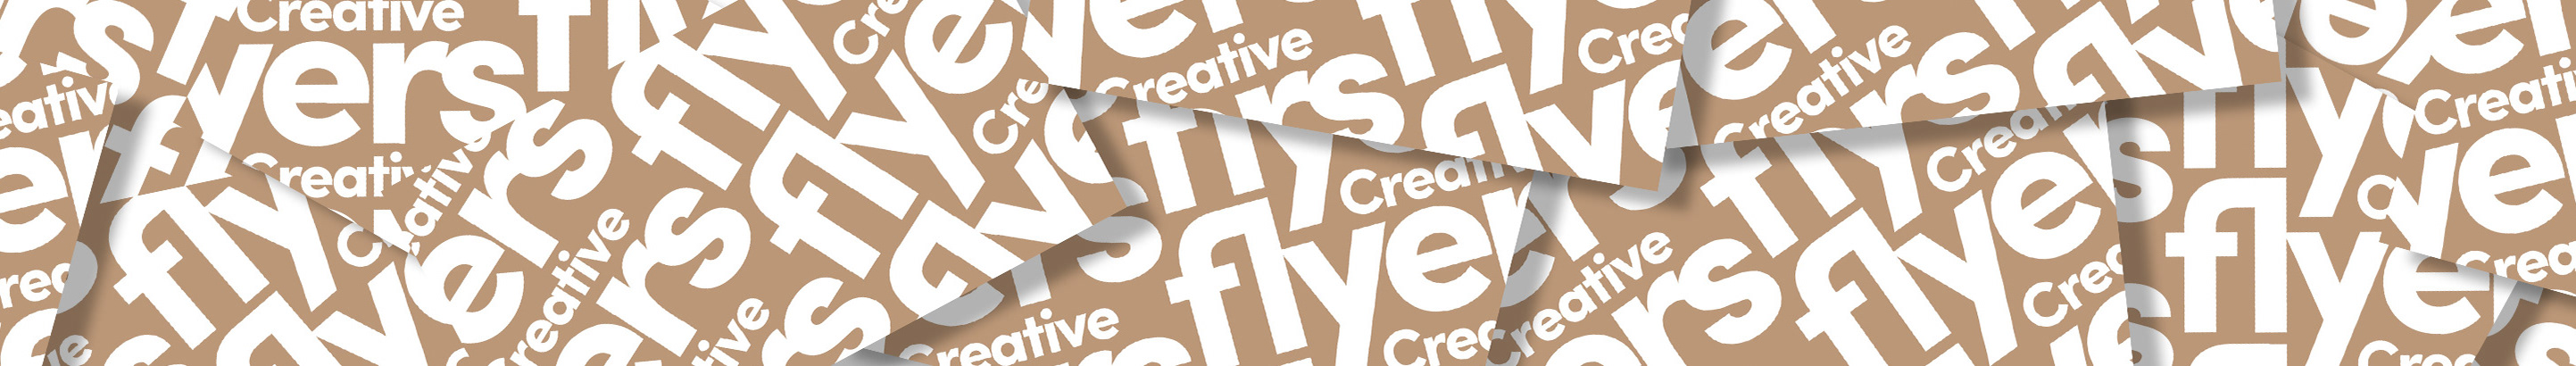 Баннер профиля Creative Flyers